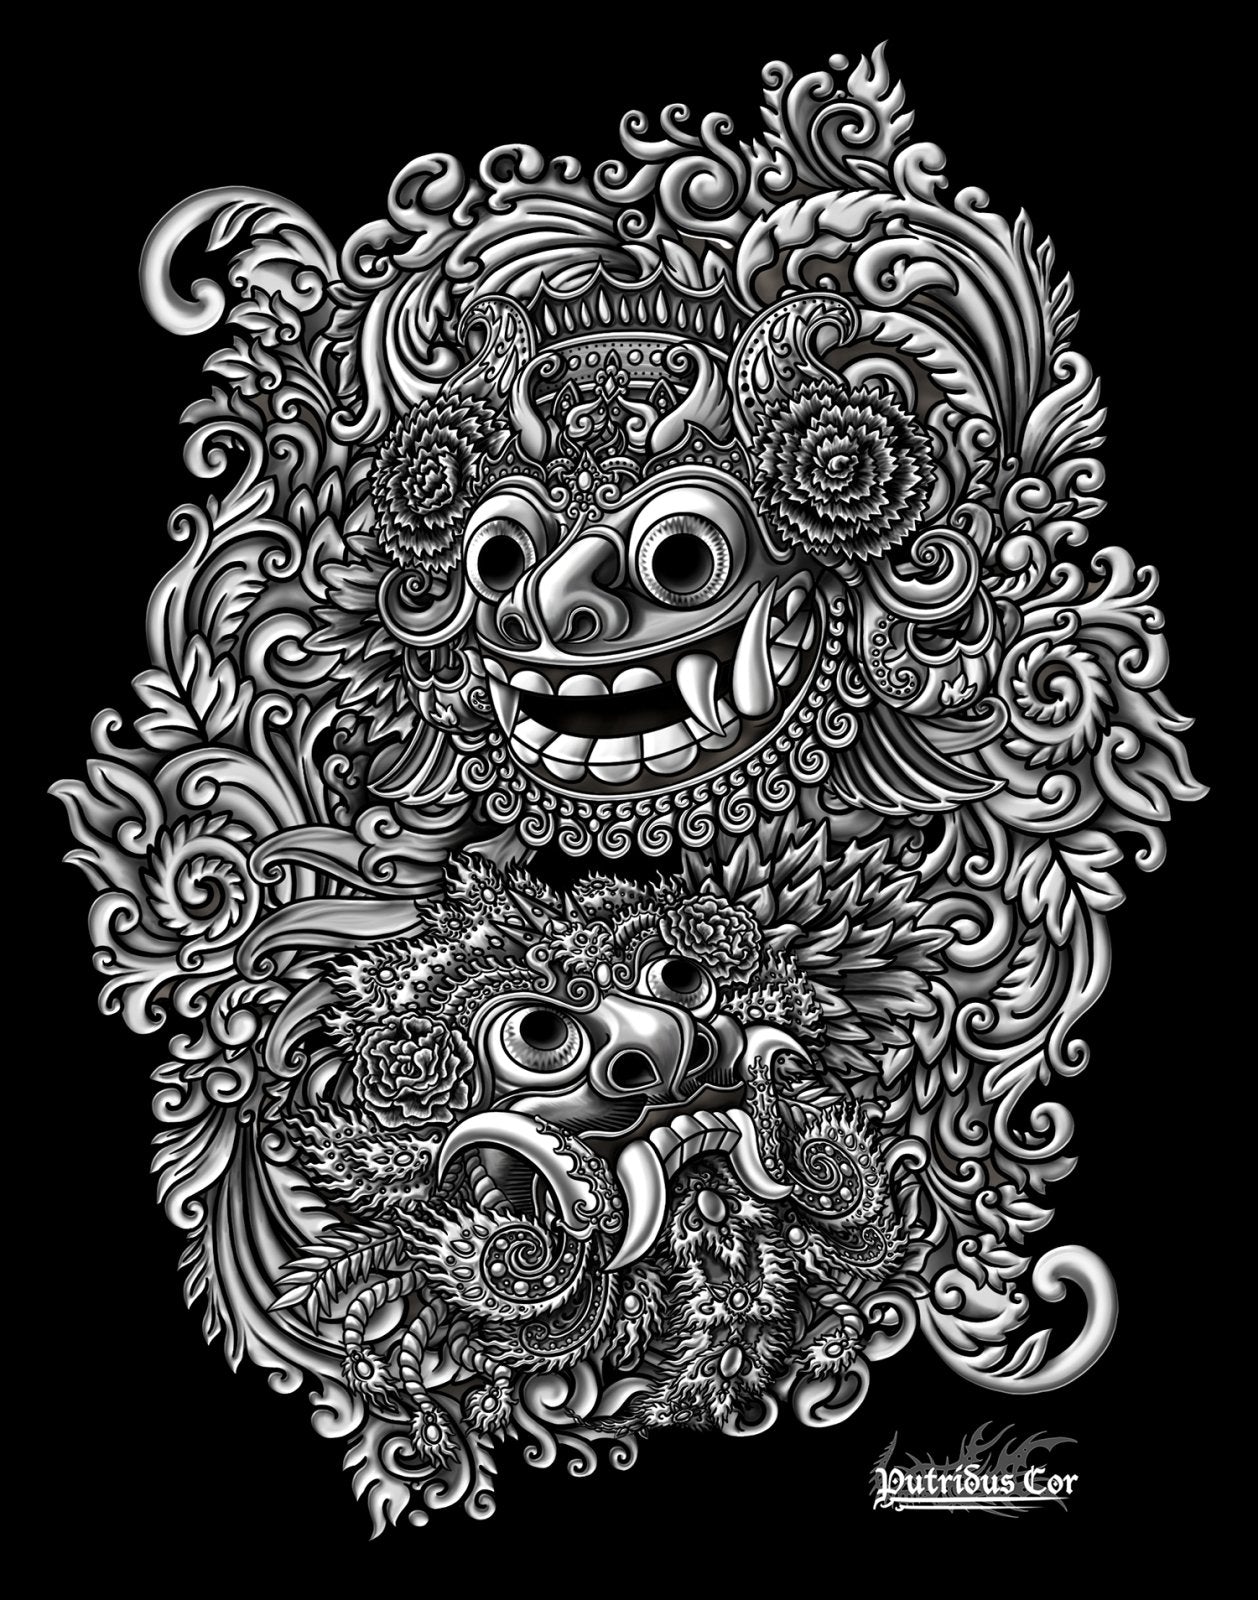 Custom Tattoo Art, Ethnic, Gods, Demons, Spirits, character and creature or monster design - Graphic Design - Abysm Internal